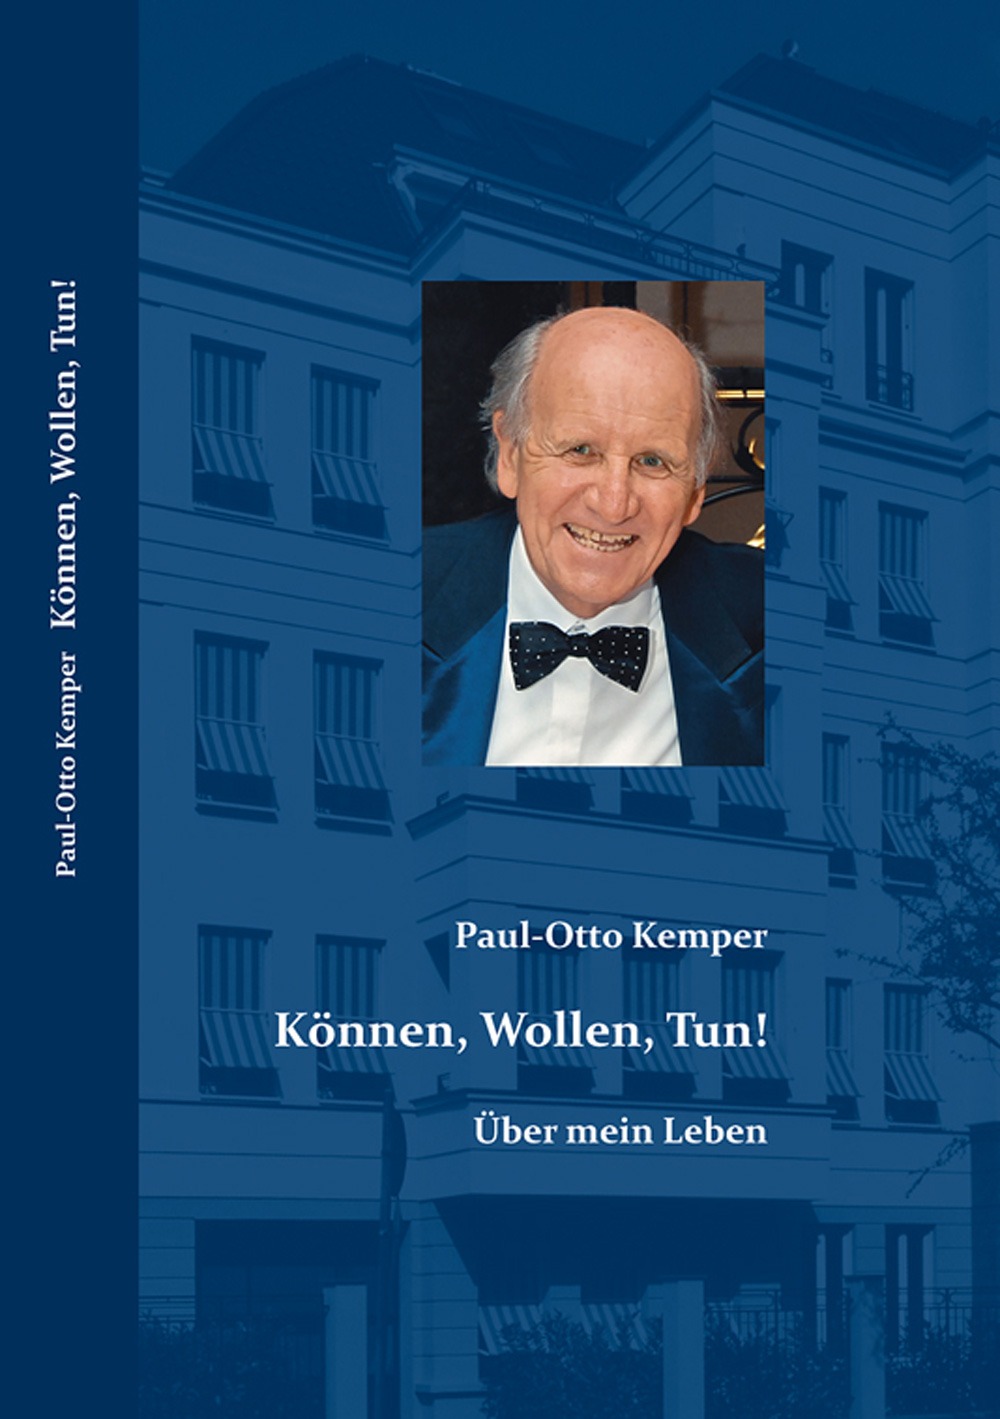 Biografie des Unternehmers Paul-Otto Kemper